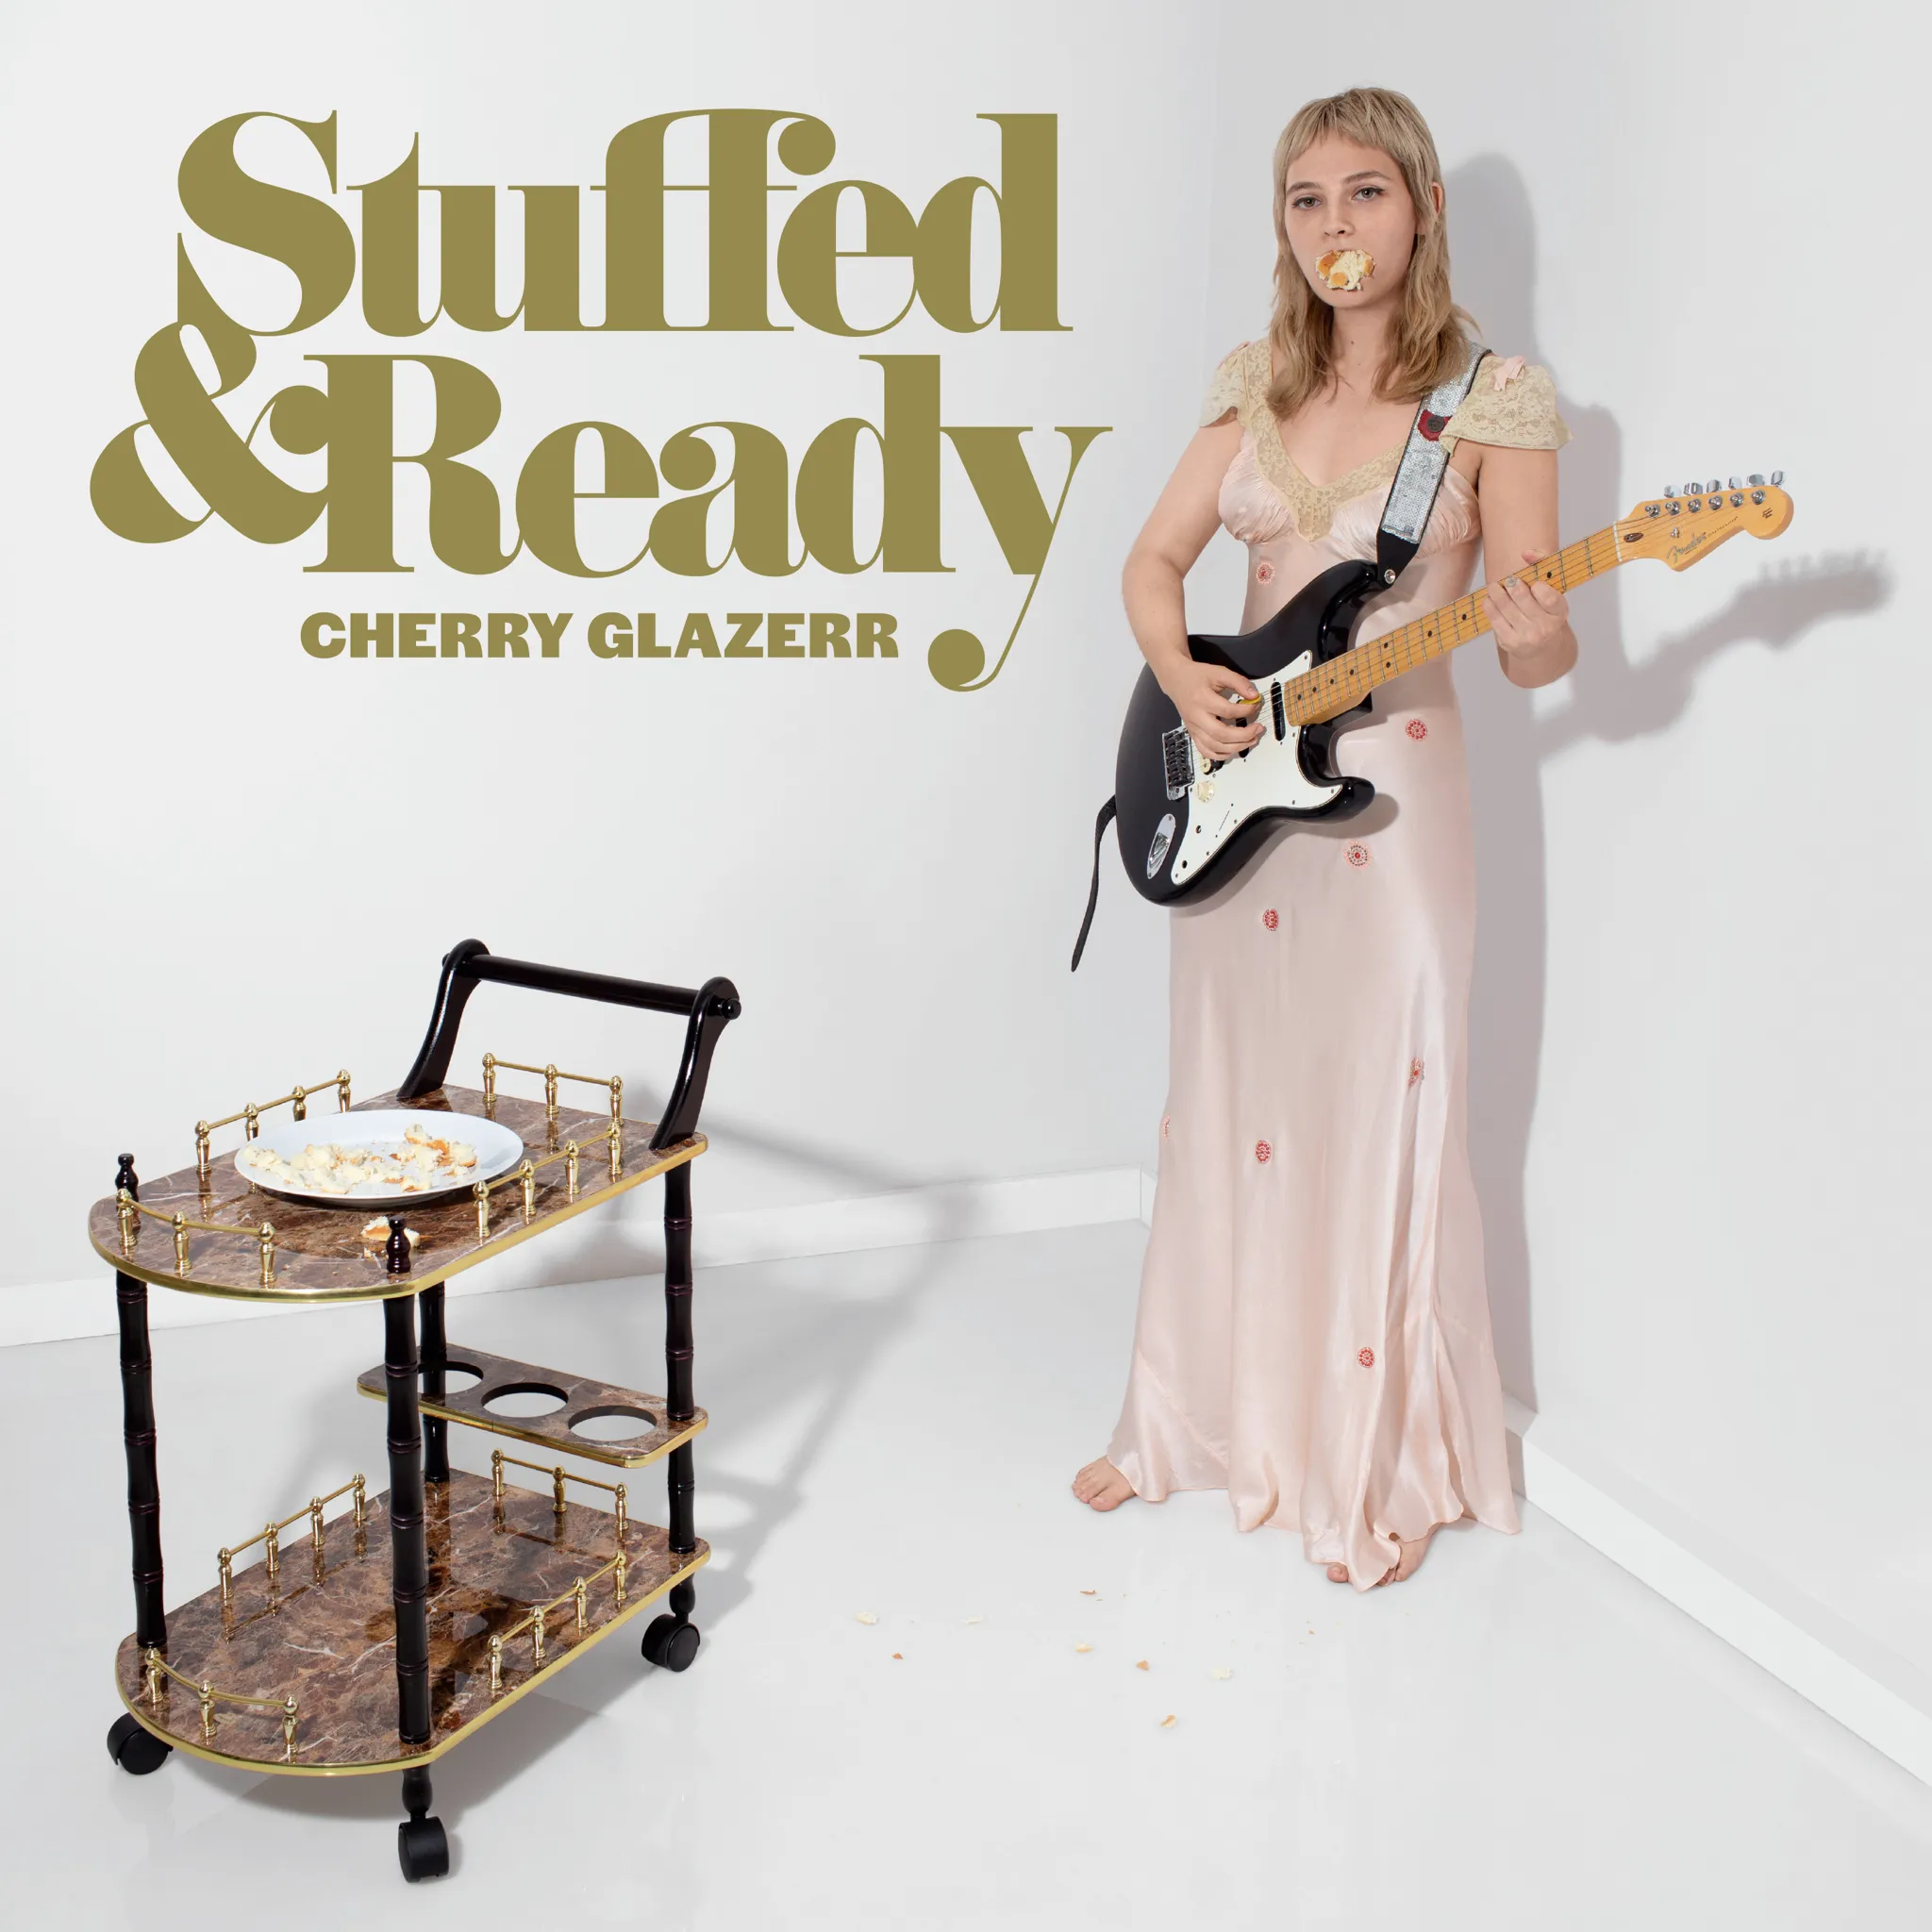 Cherry Glazerr - Stuffed and Ready artwork